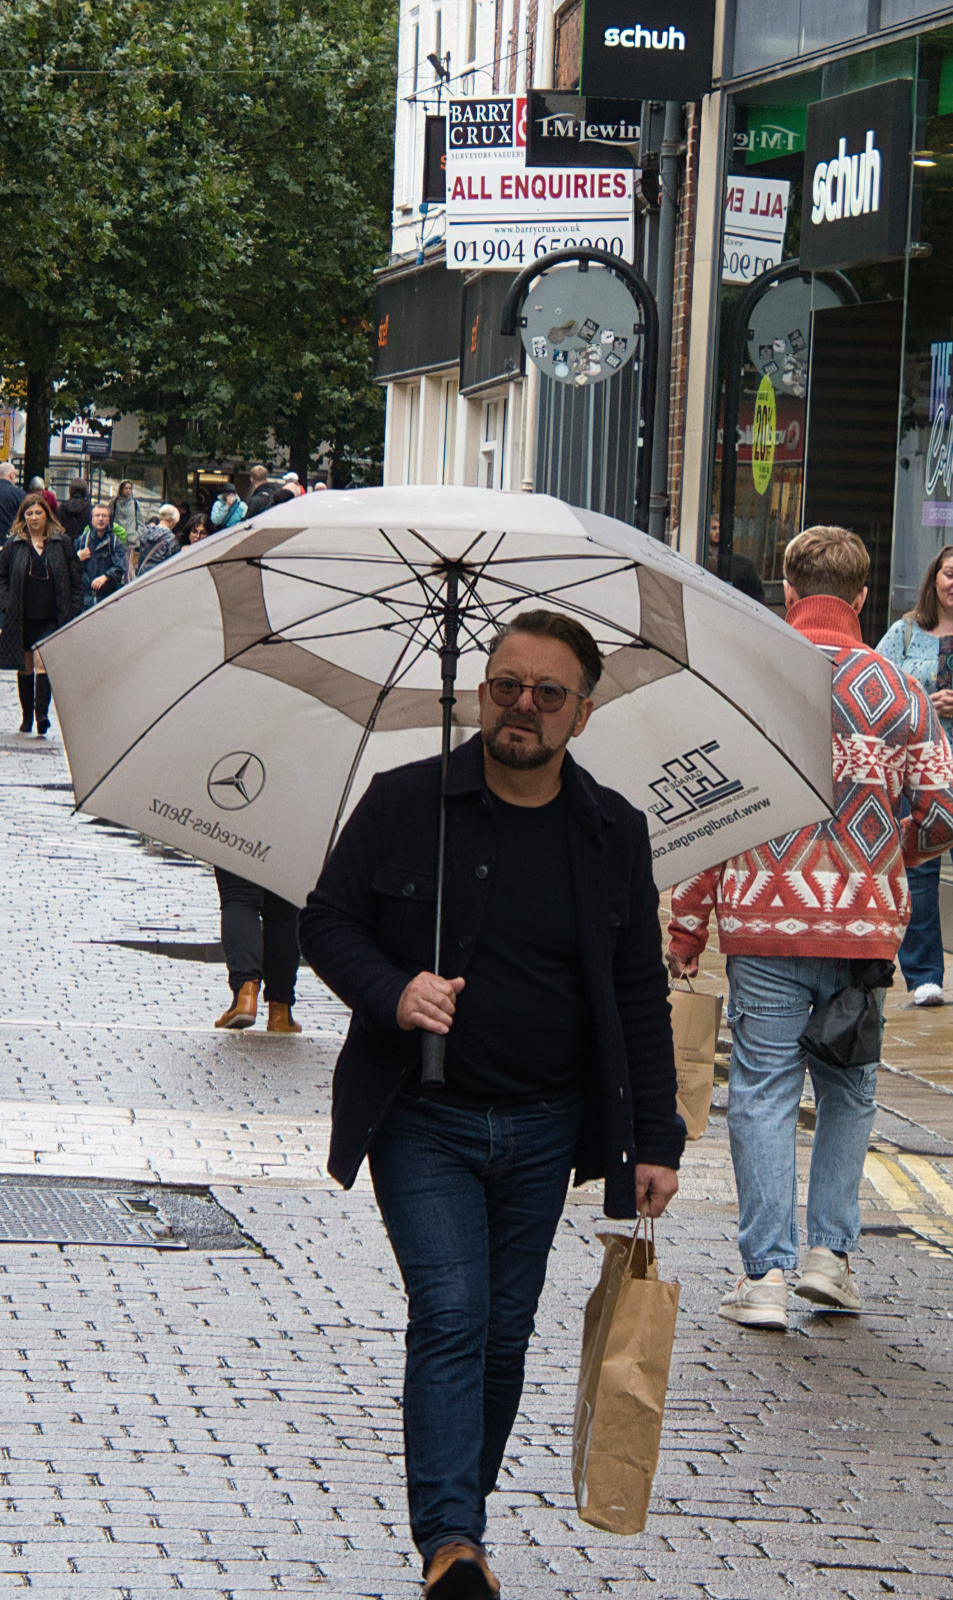 Umbrella man, Philip Dearle